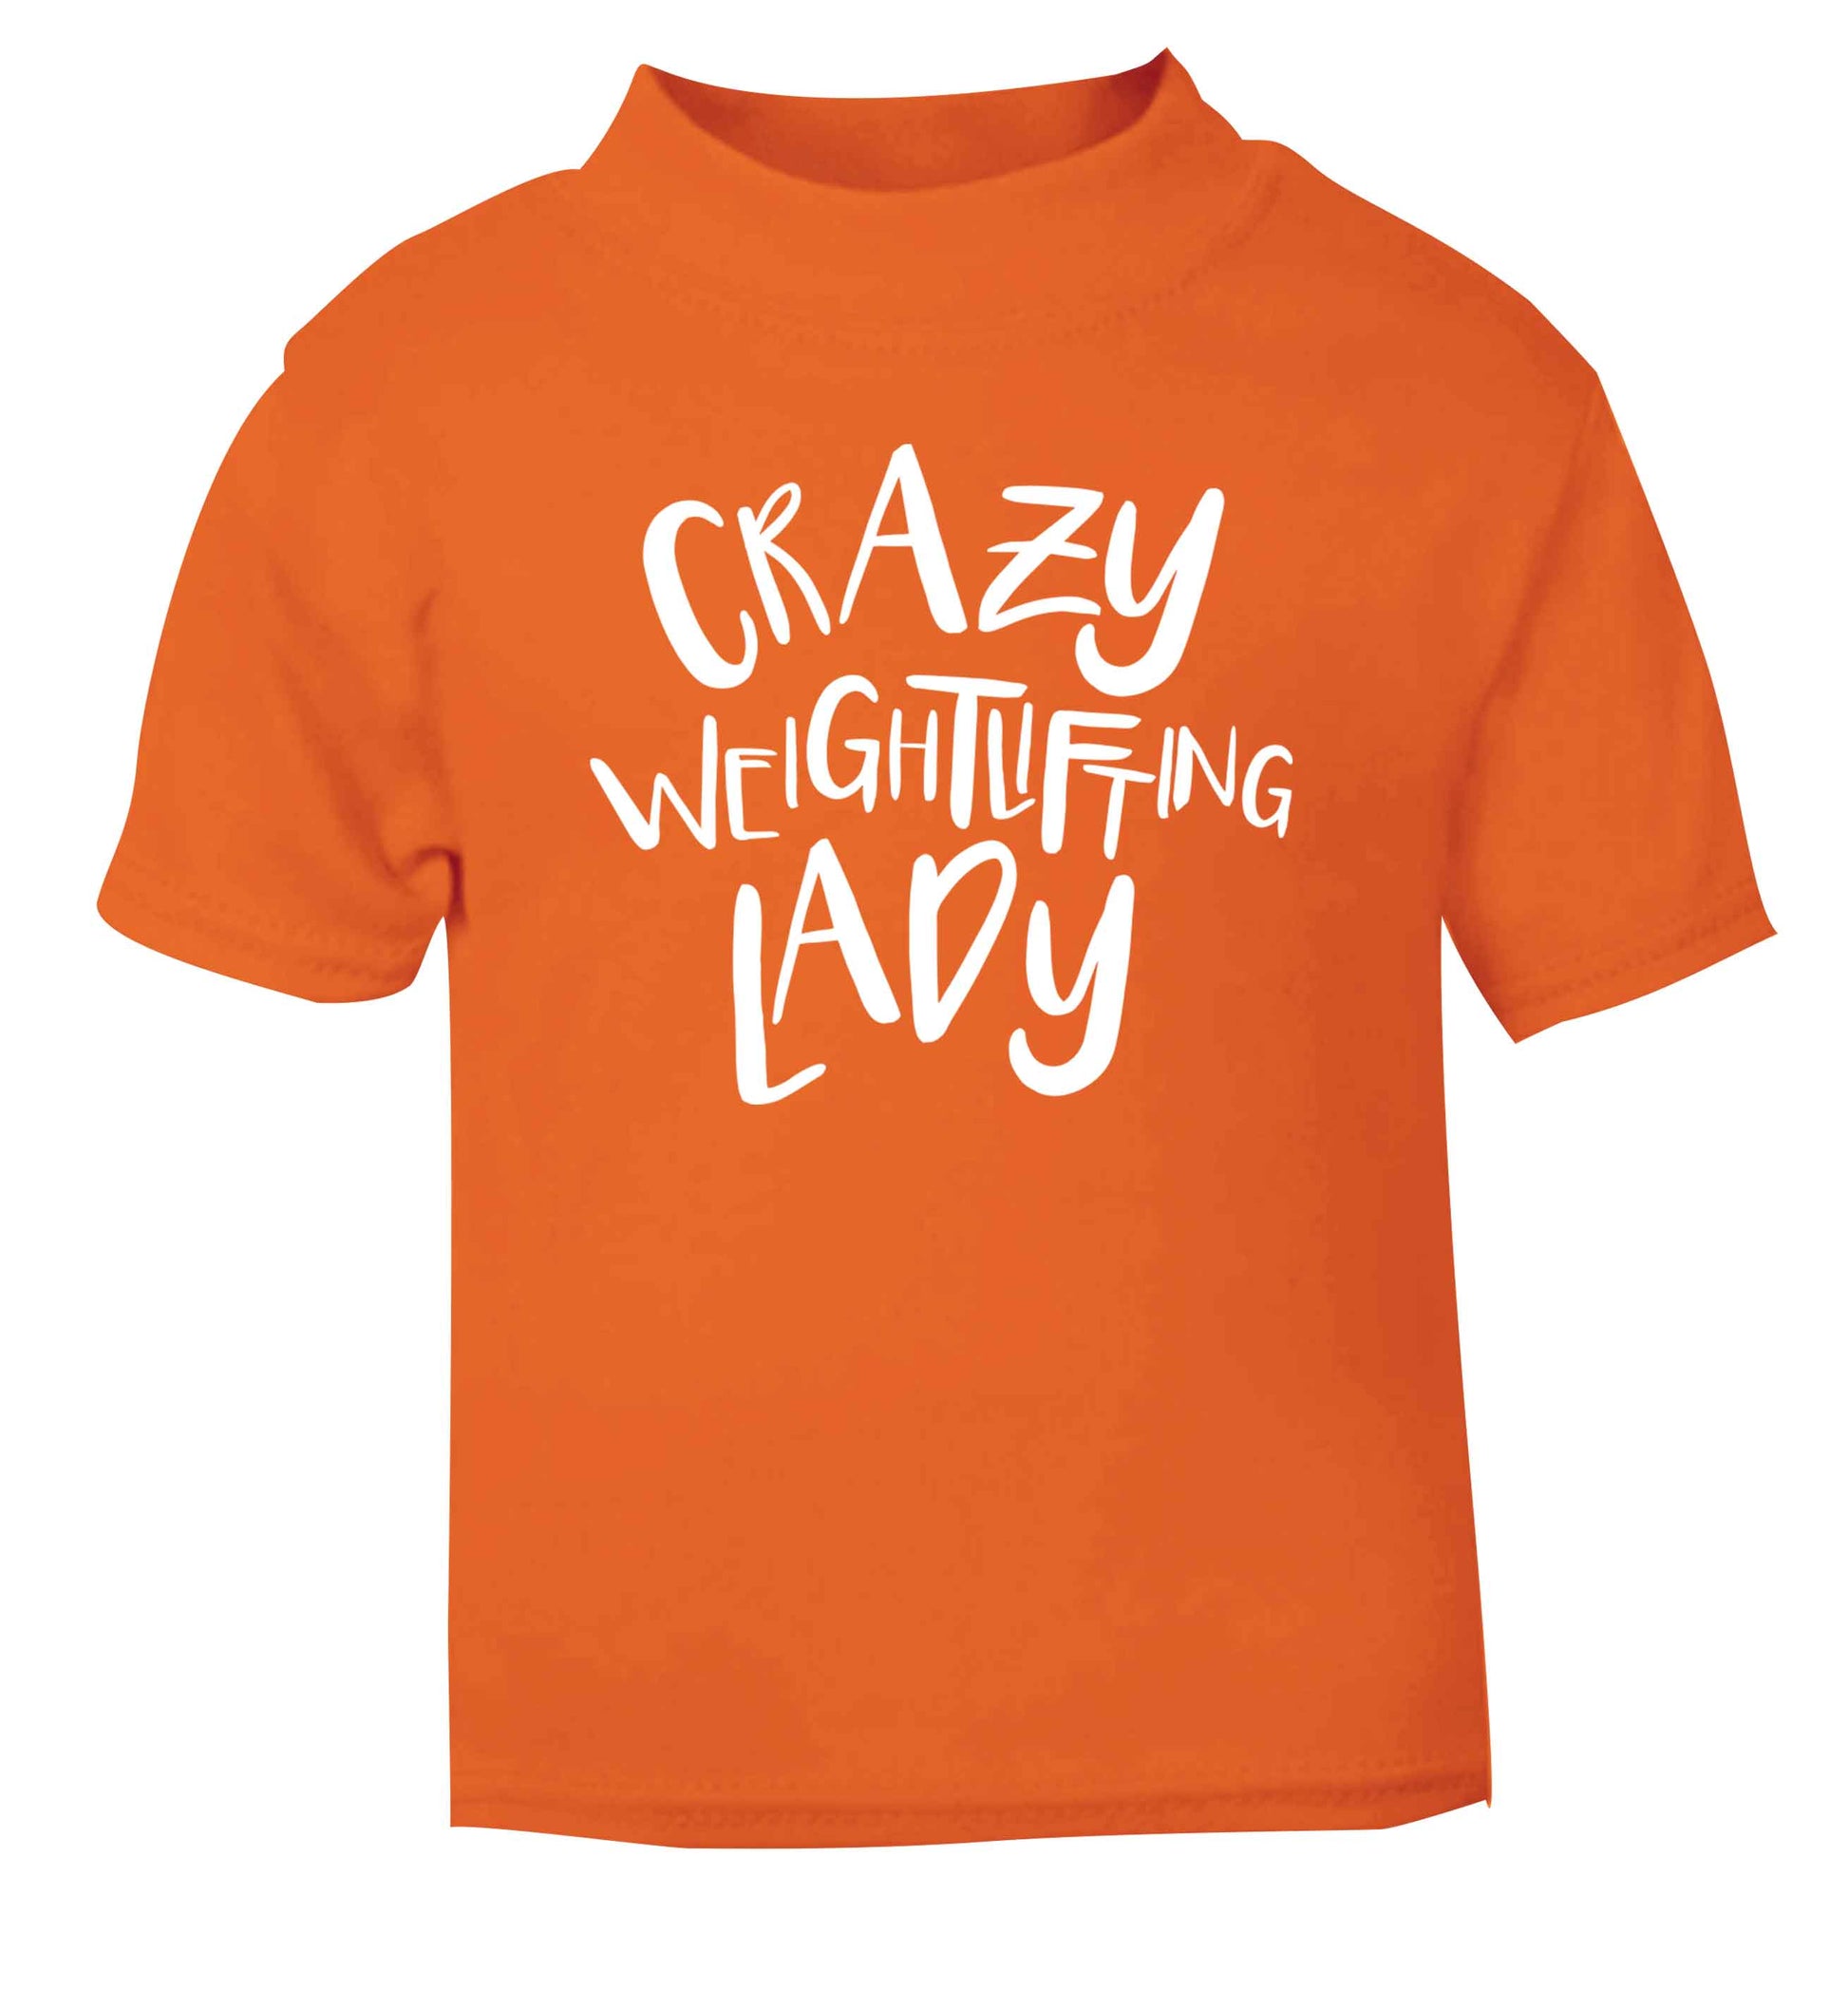 Crazy weightlifting lady orange Baby Toddler Tshirt 2 Years